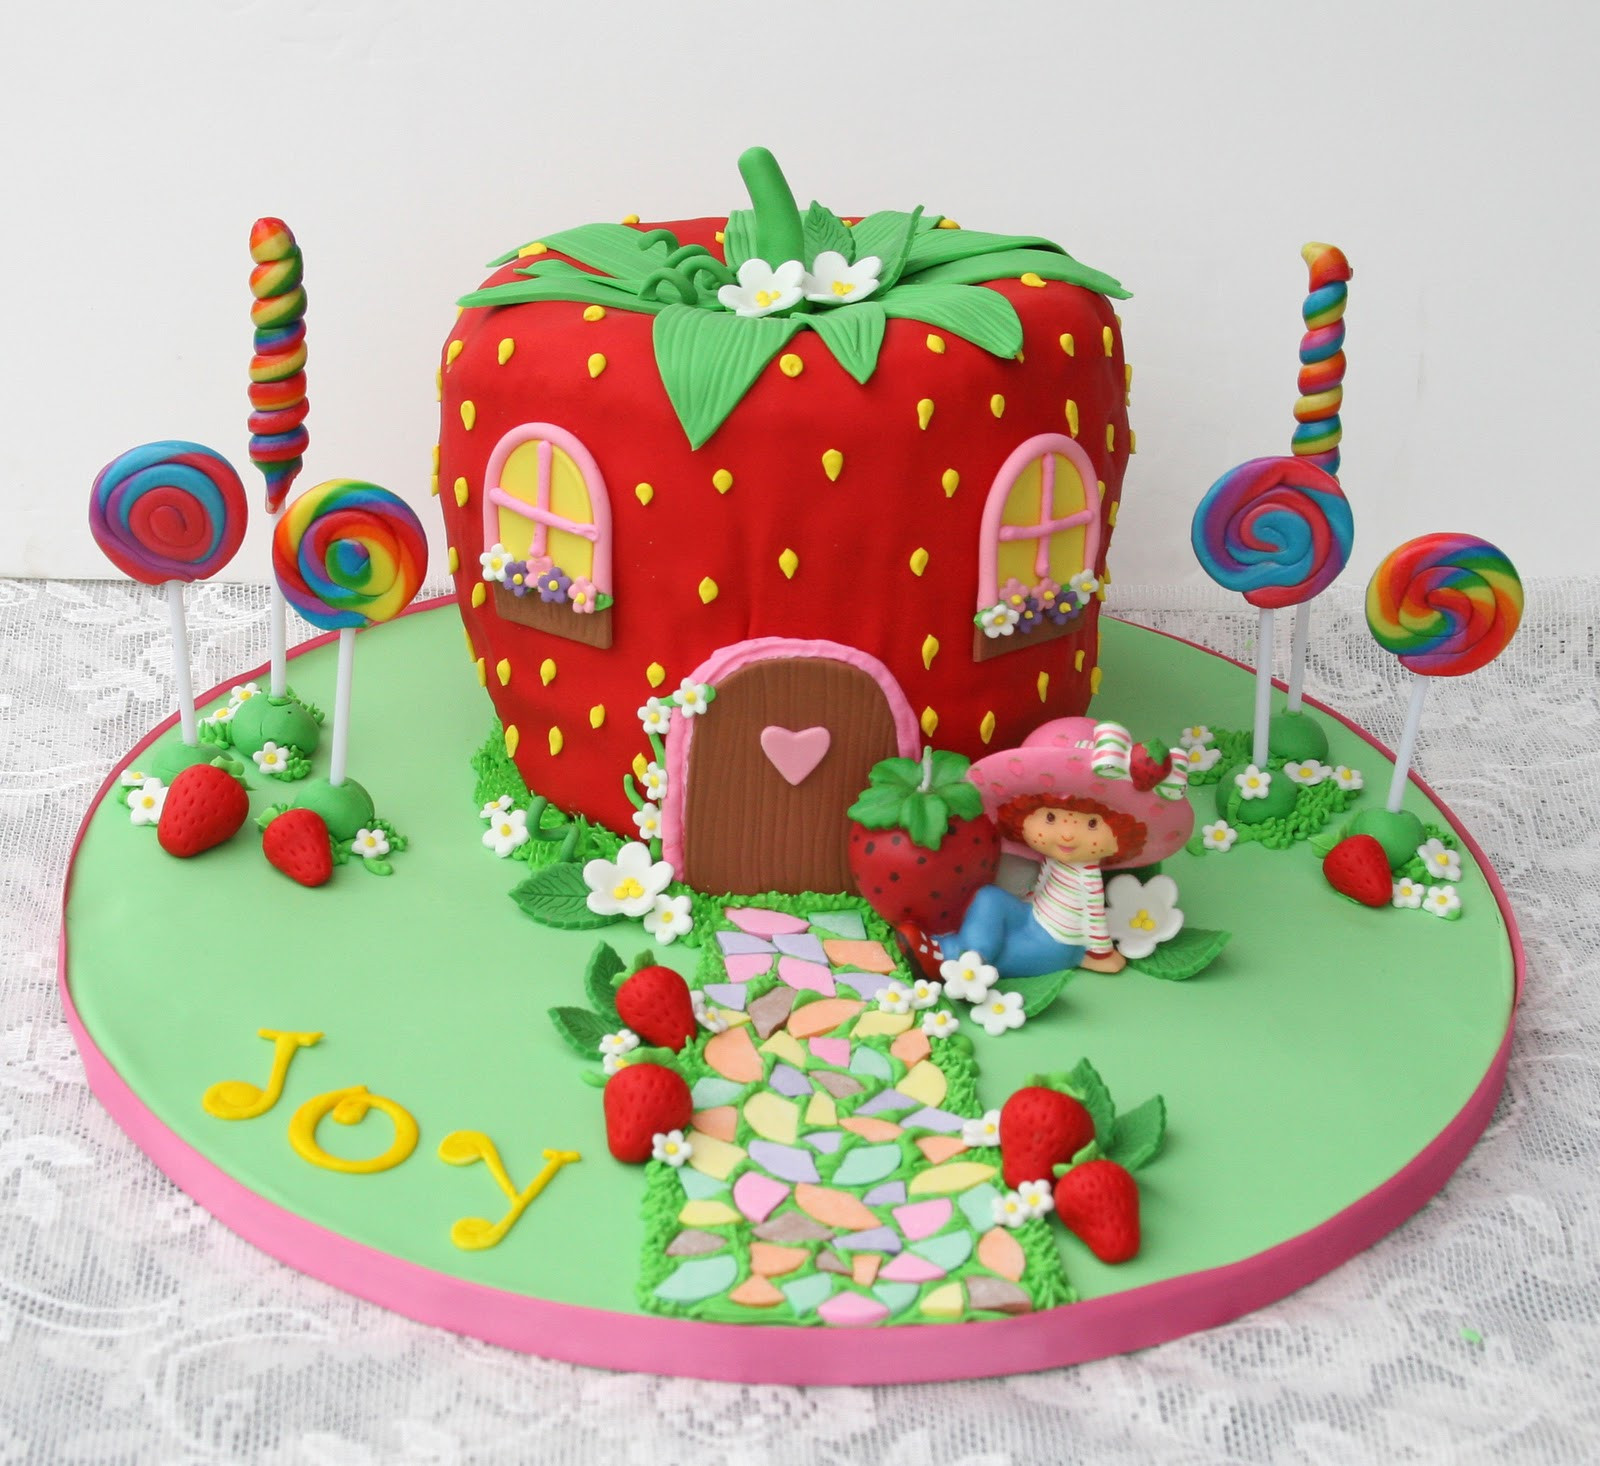 Strawberry Birthday Cake Ideas
 How to Throw a Strawberry Shortcake Party